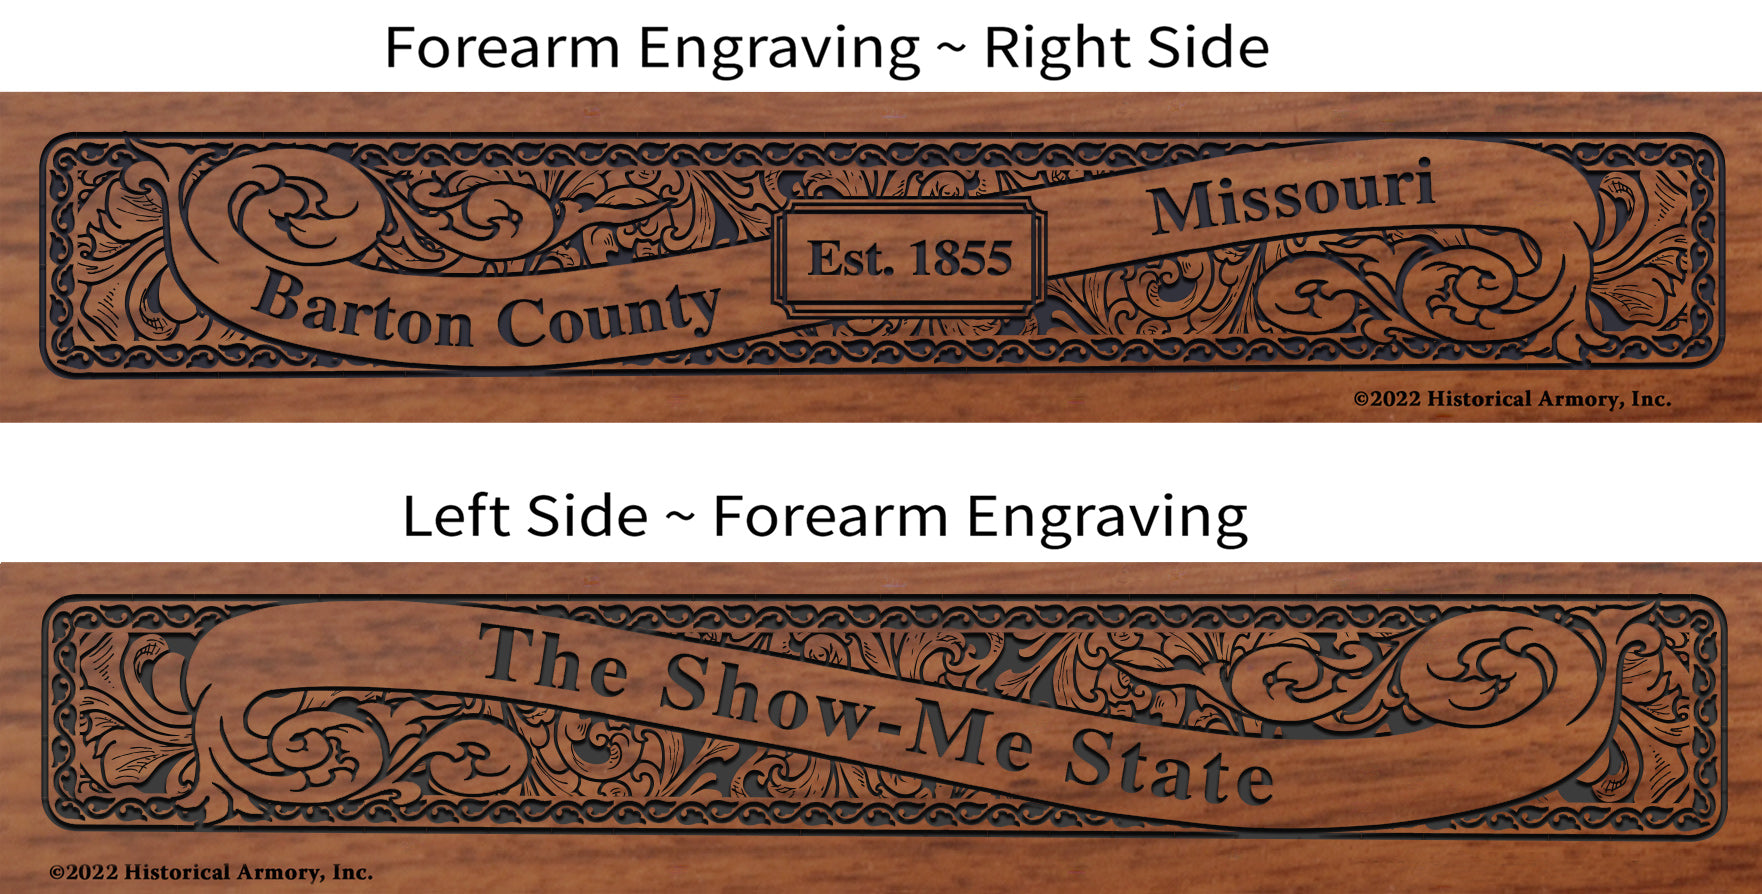 Barton County Missouri Engraved Rifle Forearm